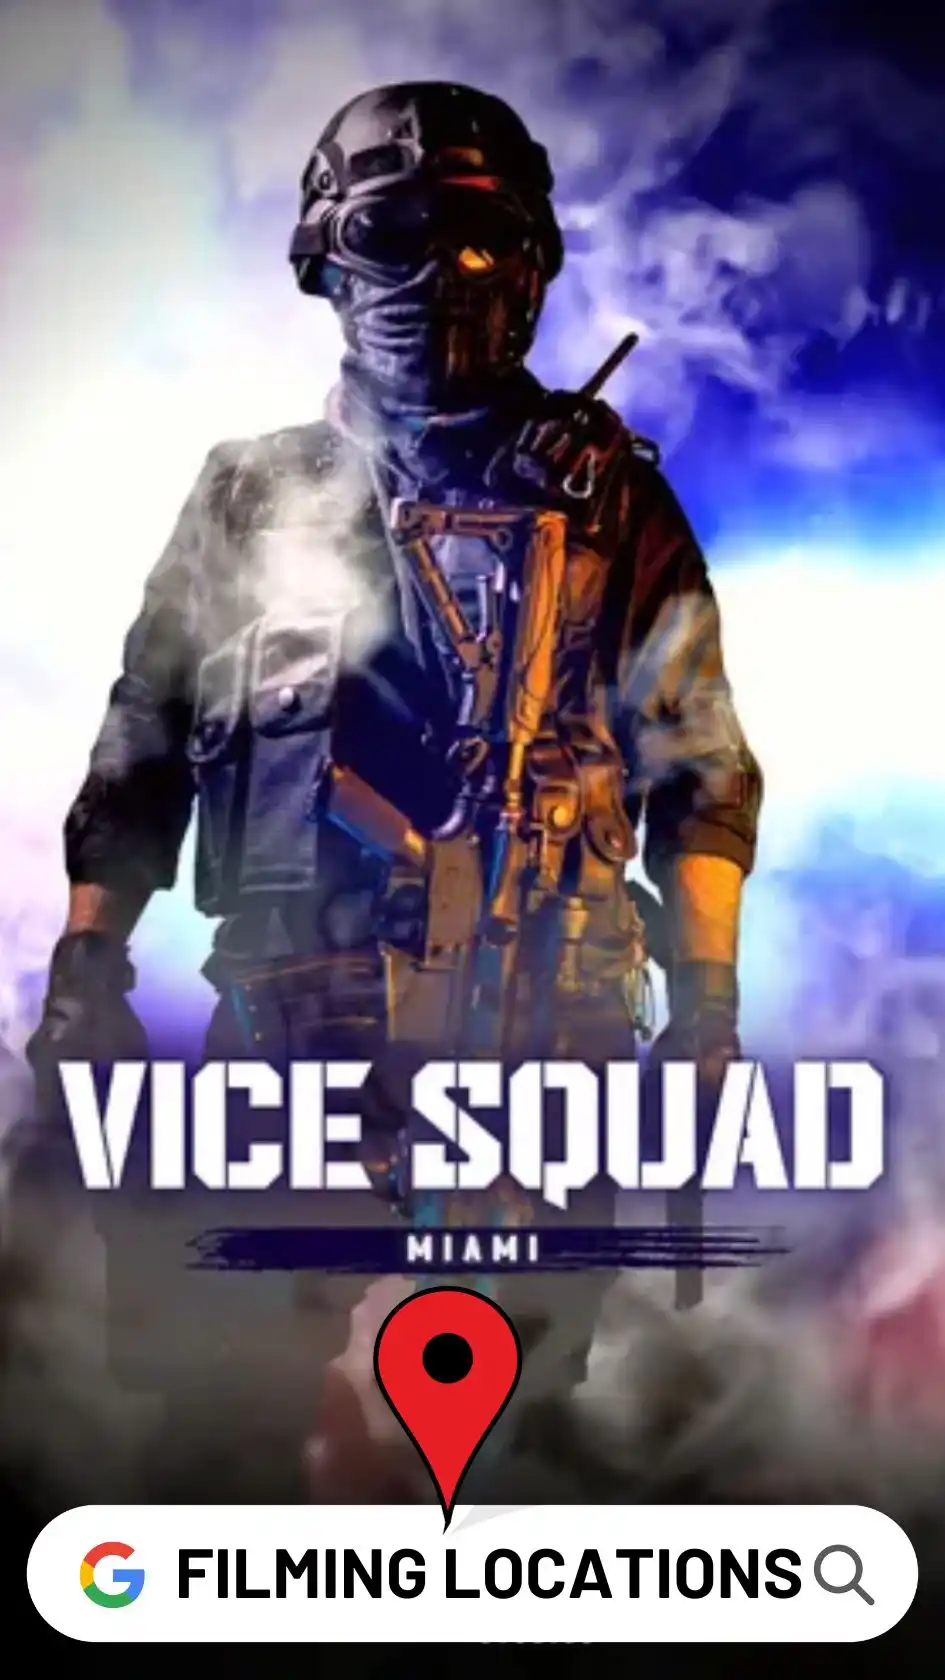 Vice Squad Miami Filming Locations